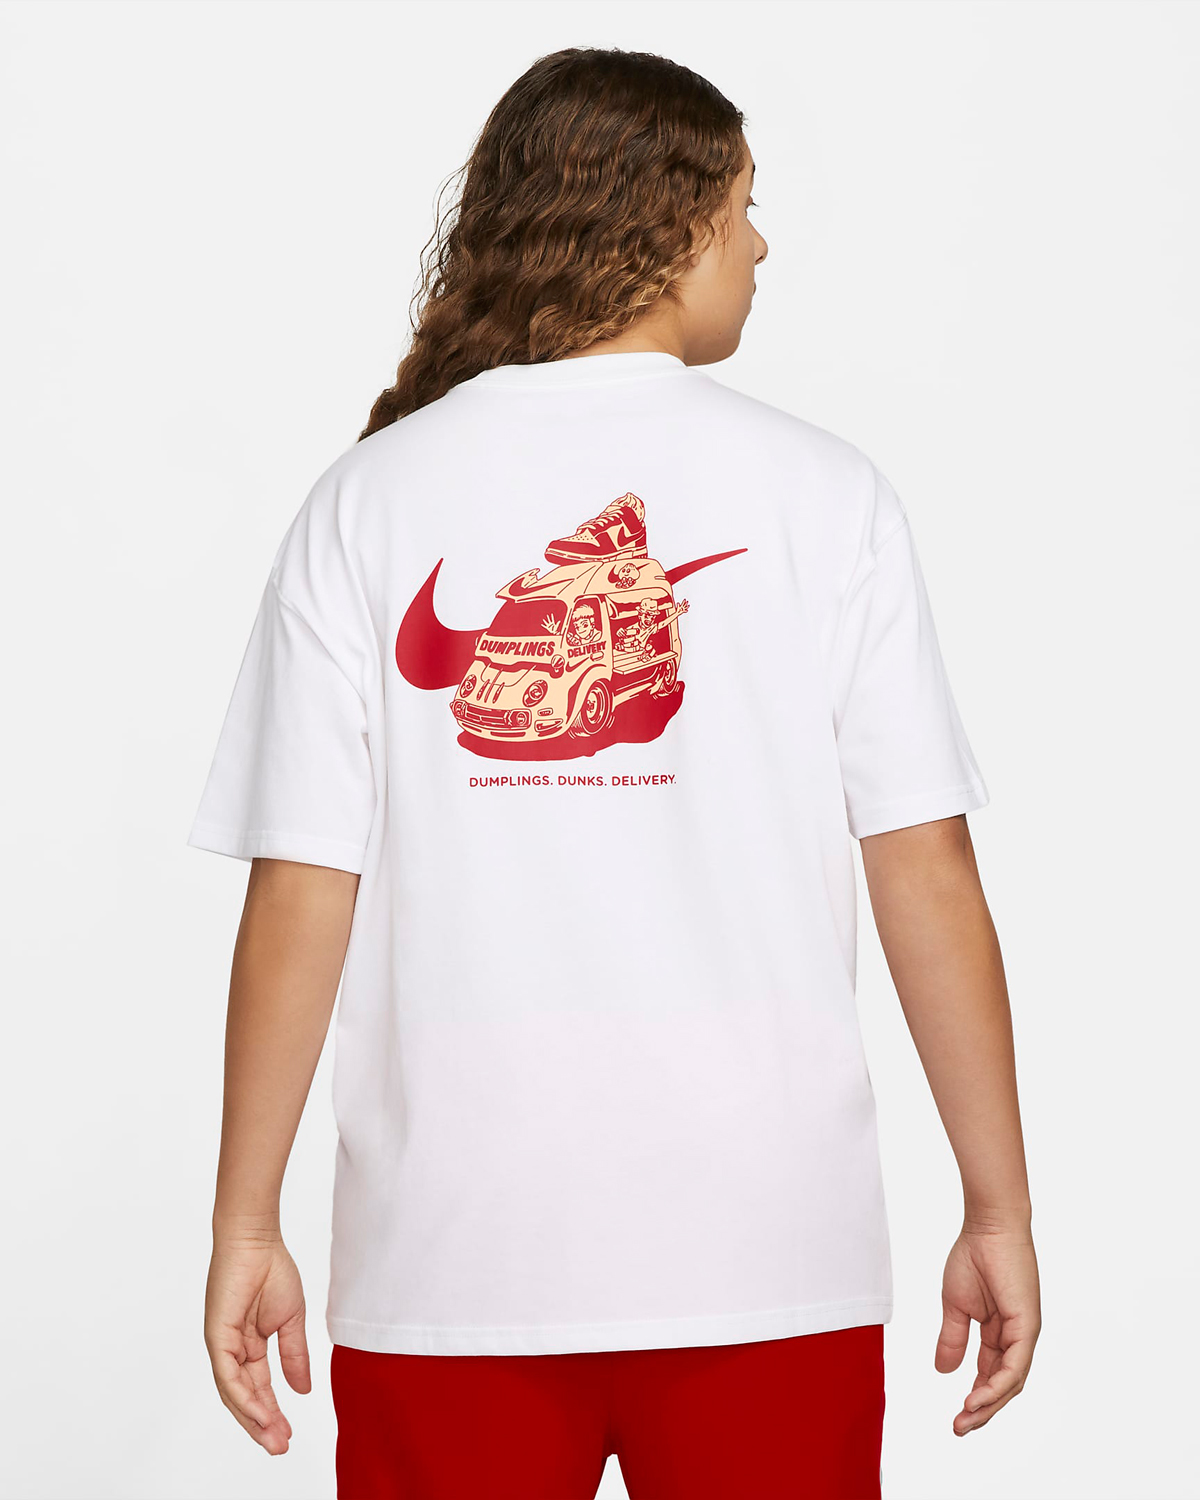 Nike-Sportswear-Dumpings-Dunks-T-Shirt-White-Red-2